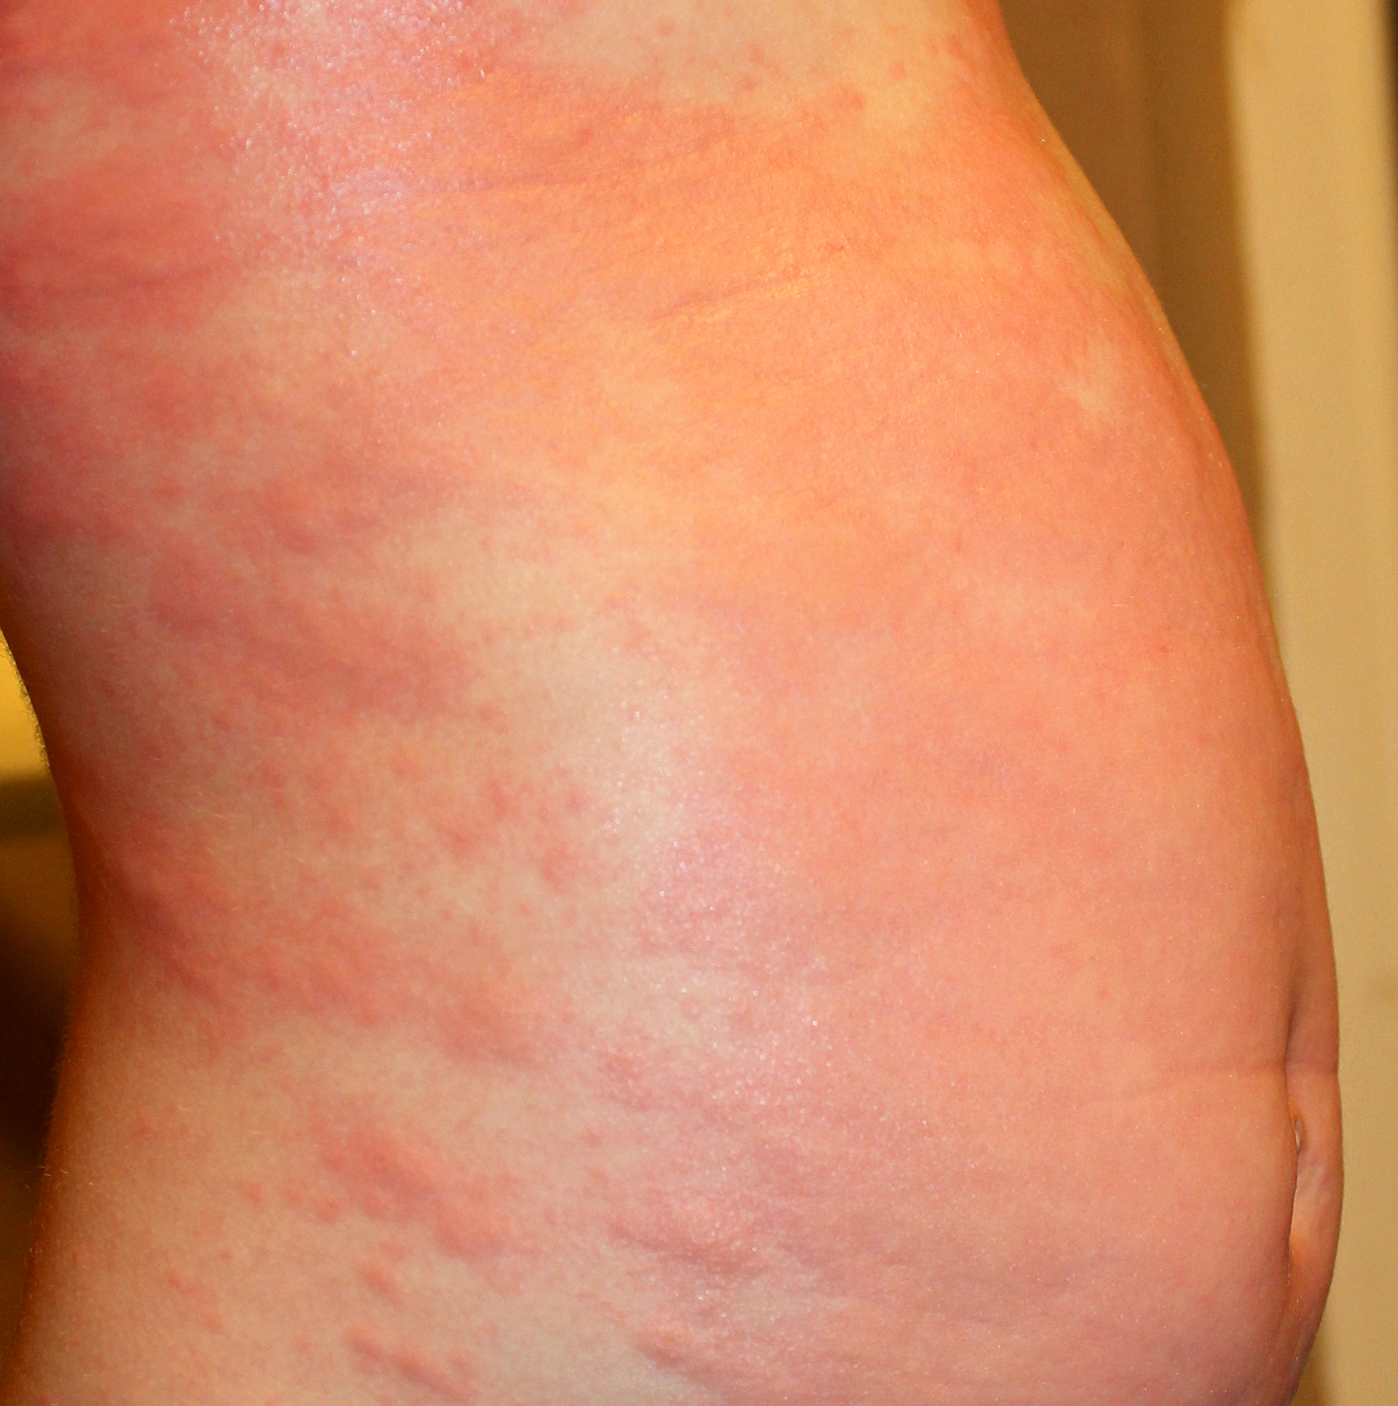 Urticaria Hives In Children Symptoms Rash Causes Treatment Images